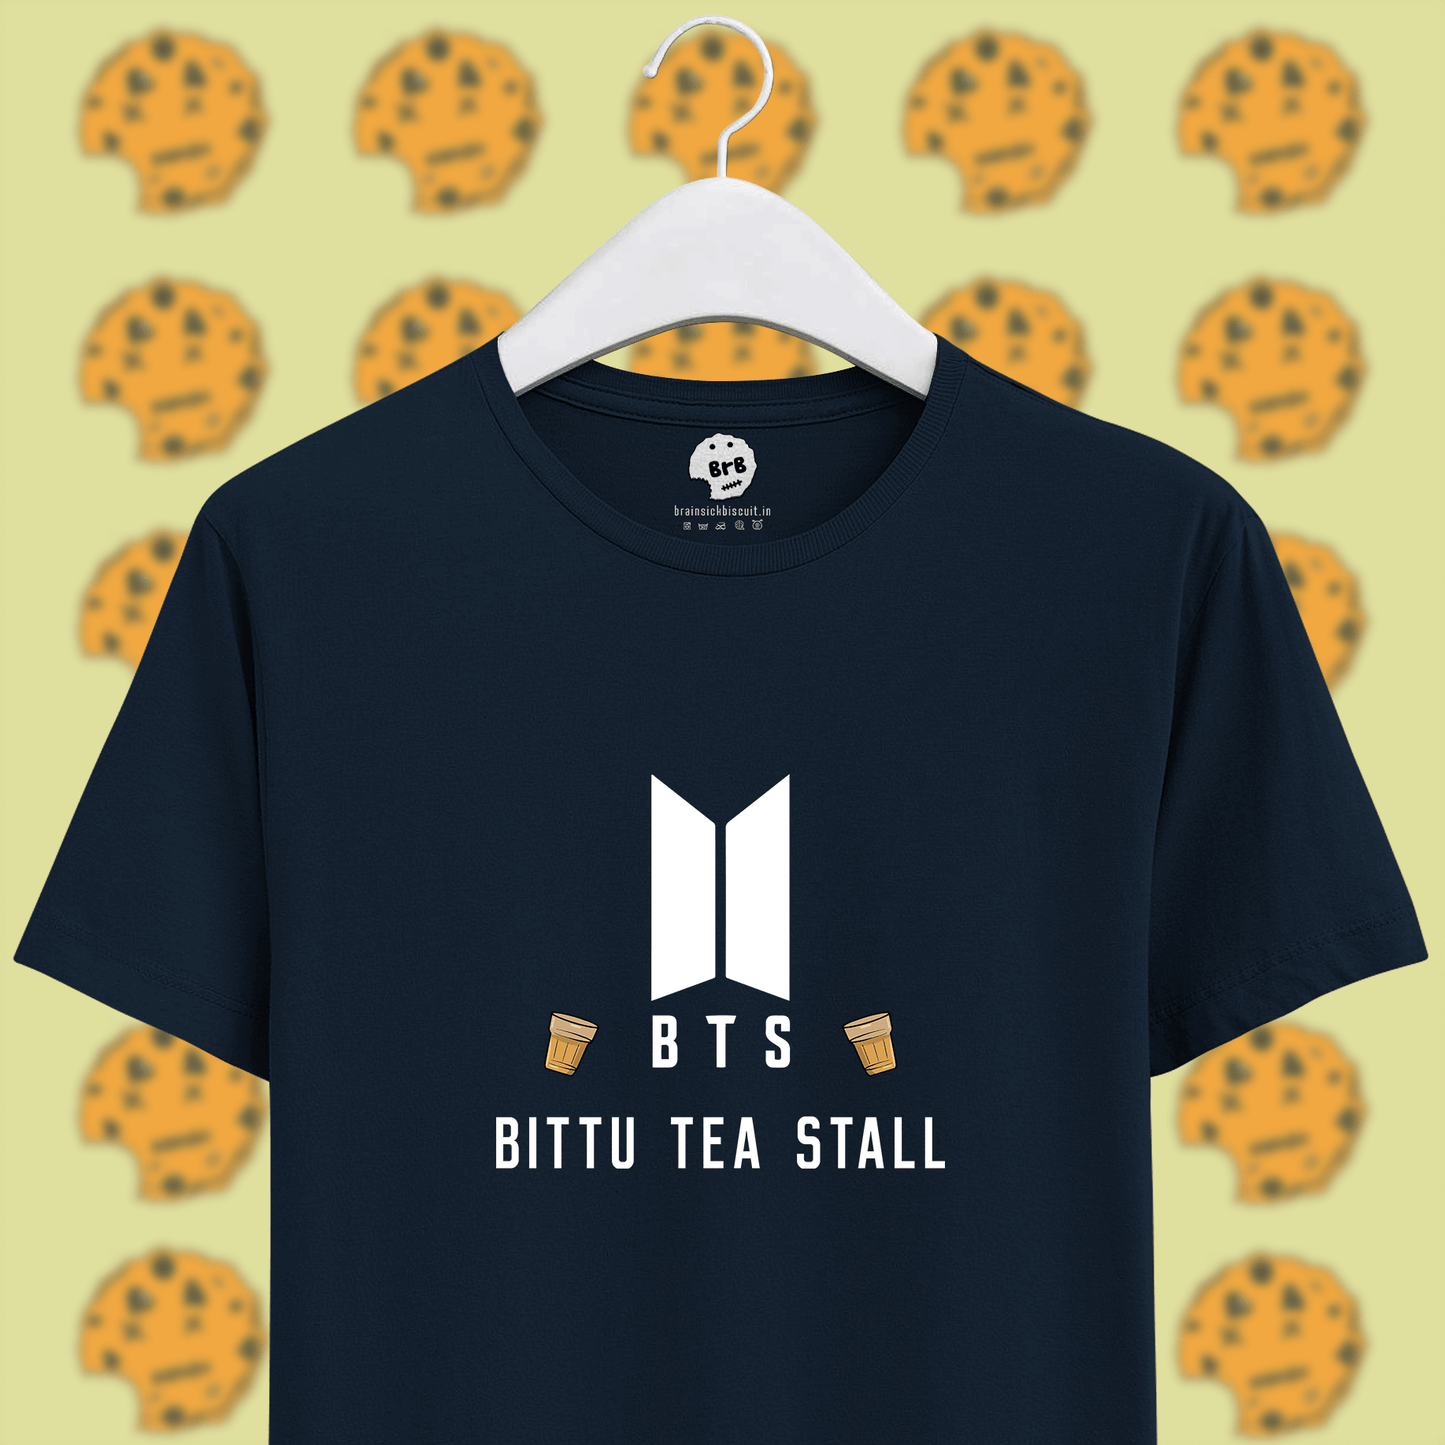 BTS logo with bittu tea stall joke on unisex navy blue half sleeves cotton t-shirt.